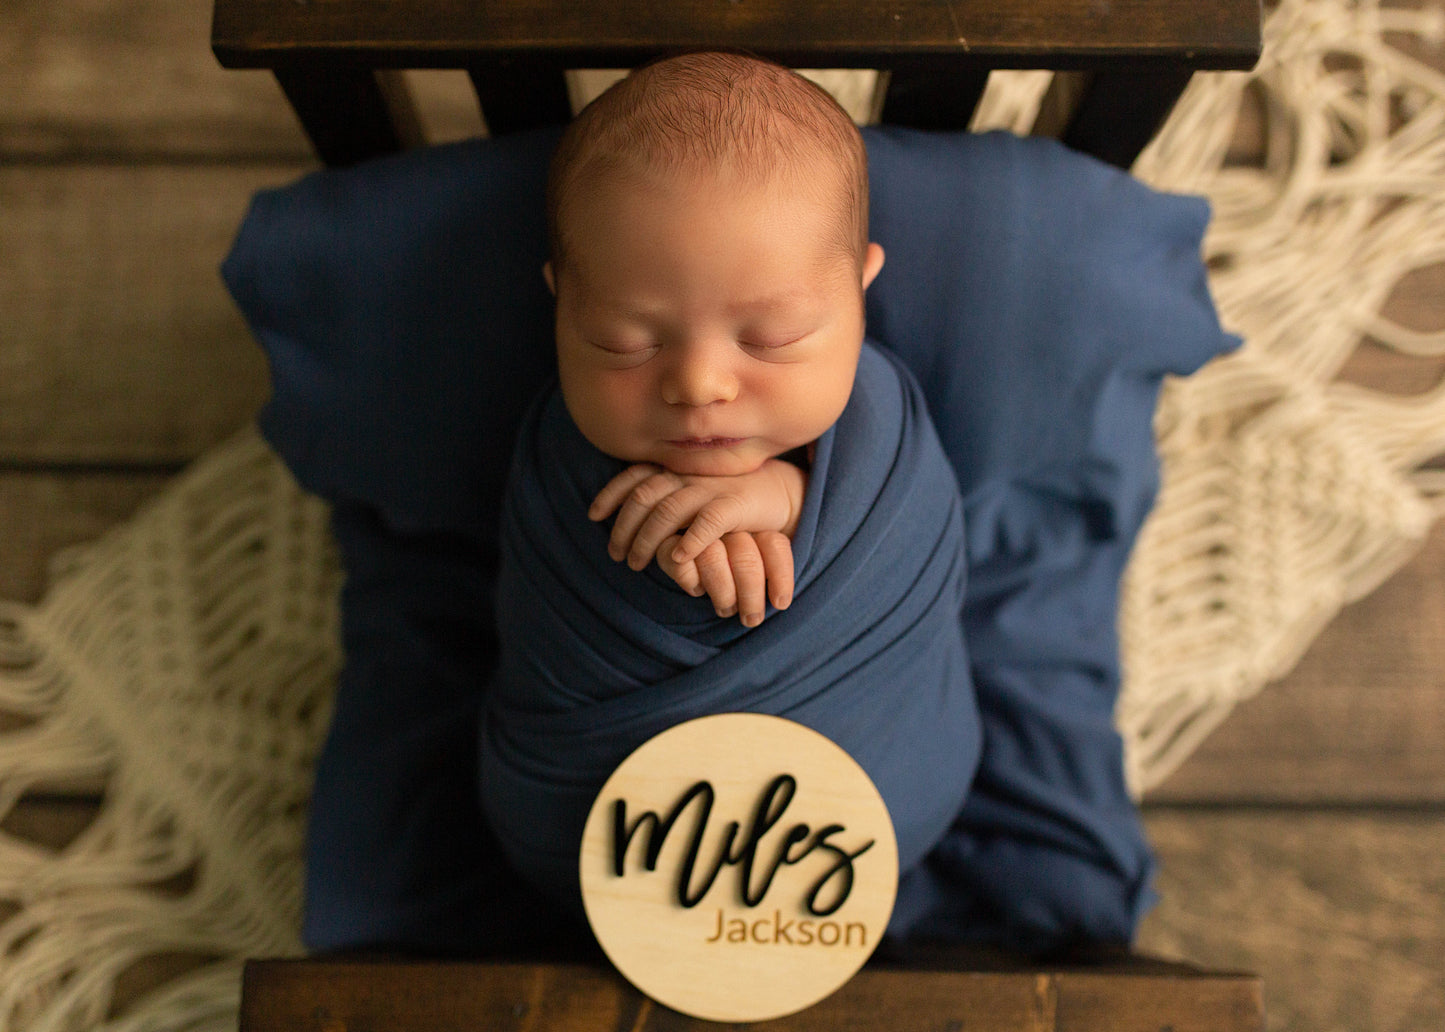 Miles Jackson Baby Name Sign